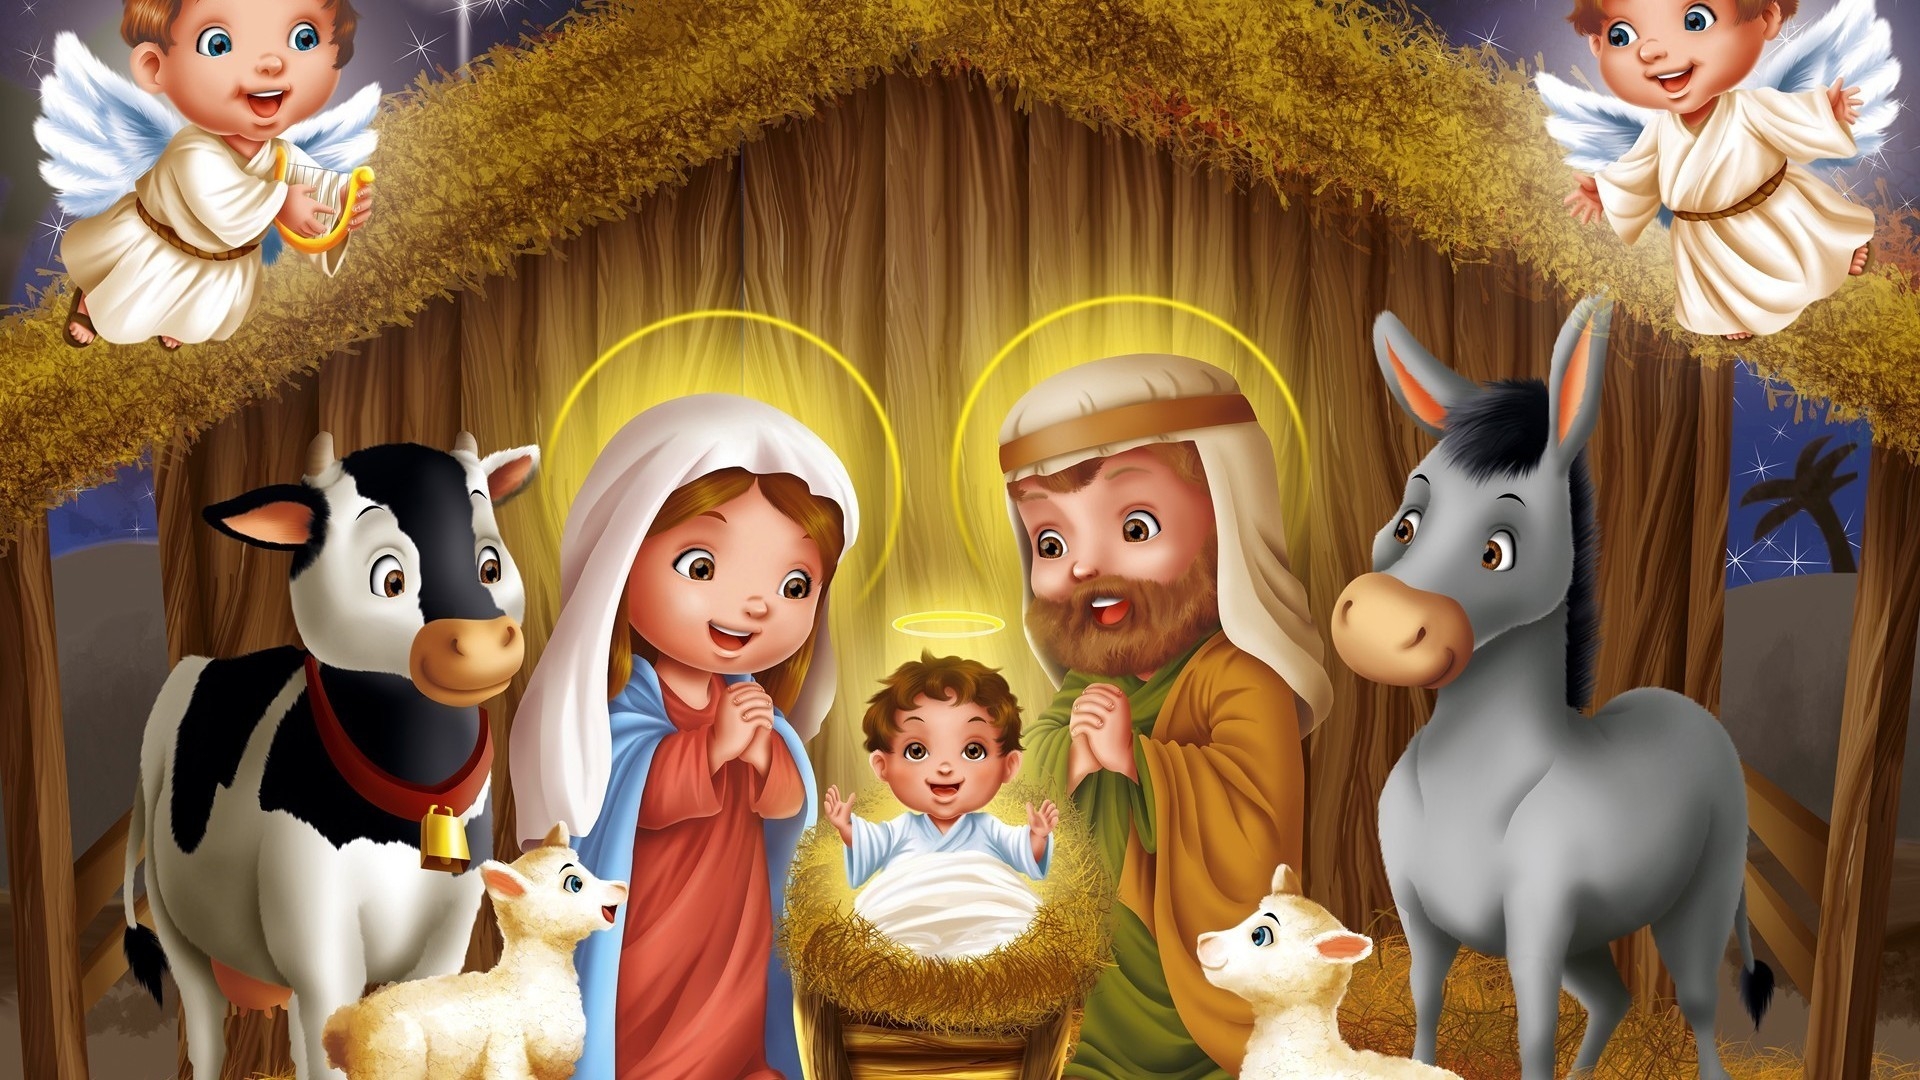 Story Birth of Jesus Christ for 1920 x 1080 HDTV 1080p resolution